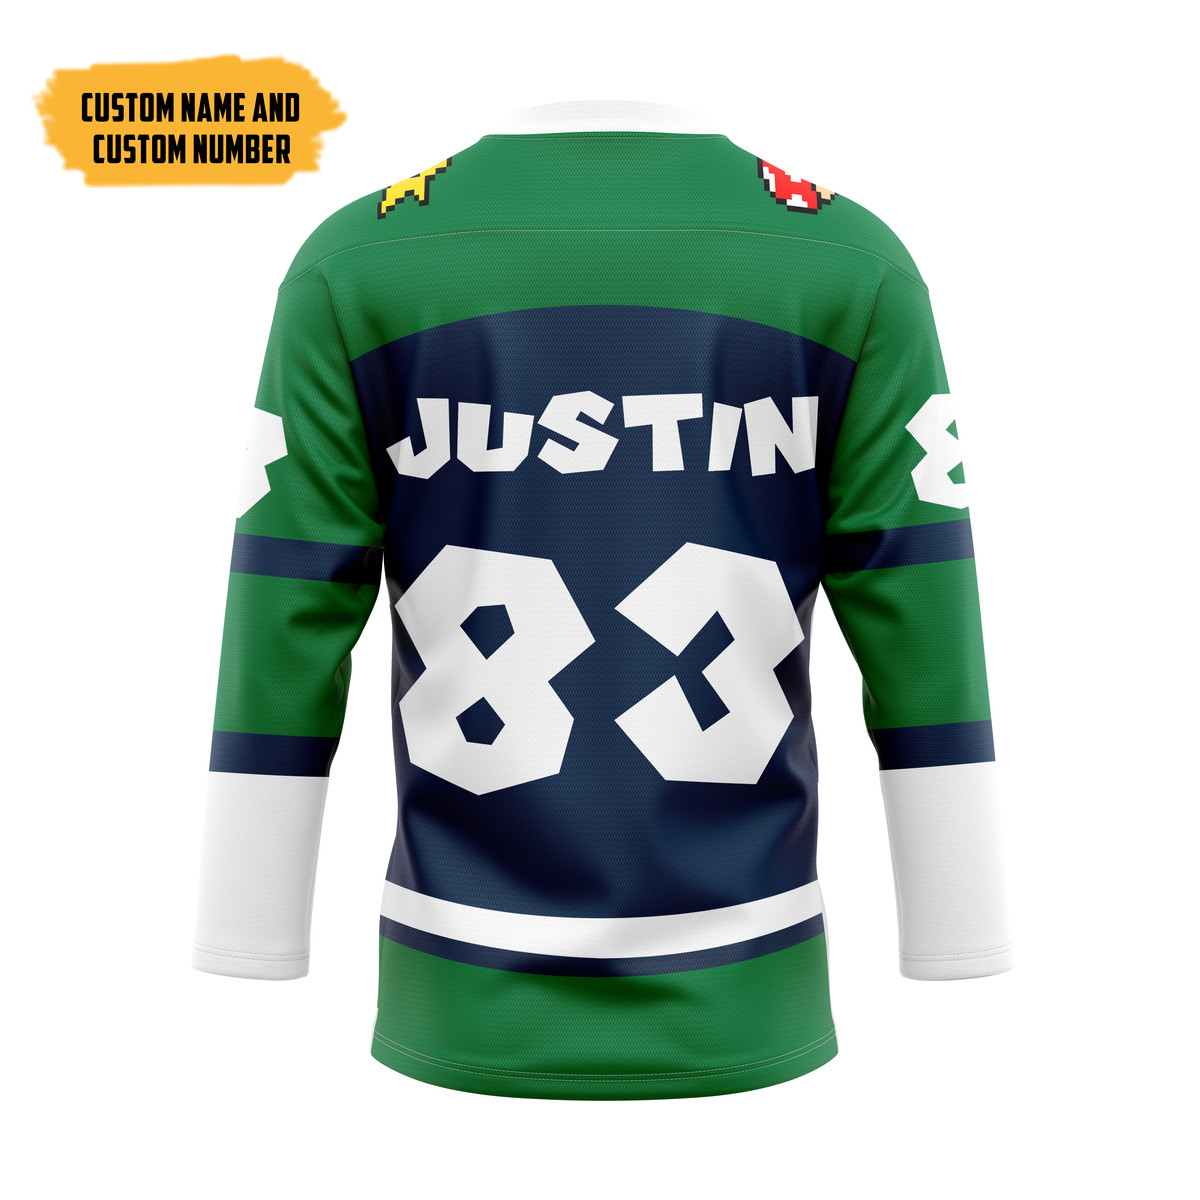 Luigi Sports Custom Hockey Jersey2